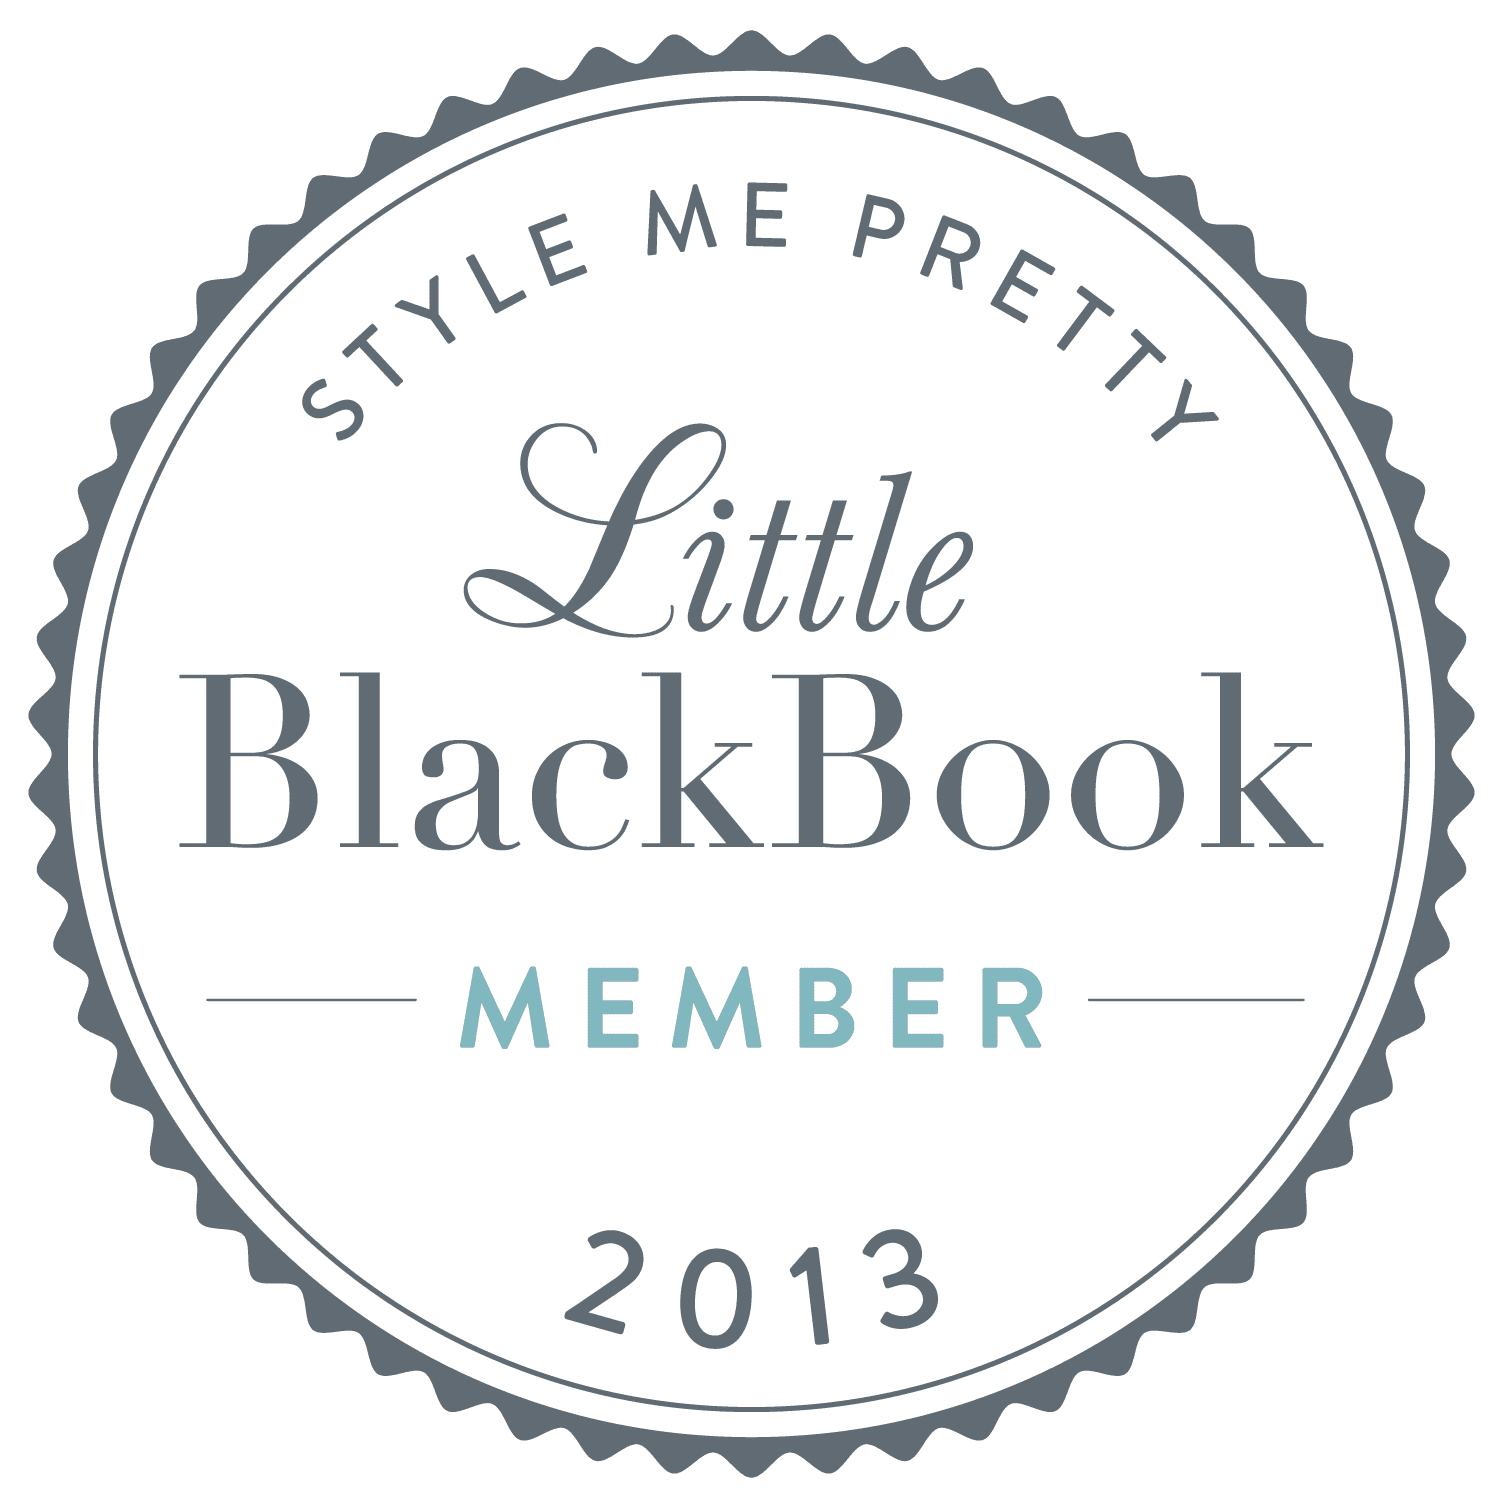 The Best Wedding Vendors - The Little Black Book